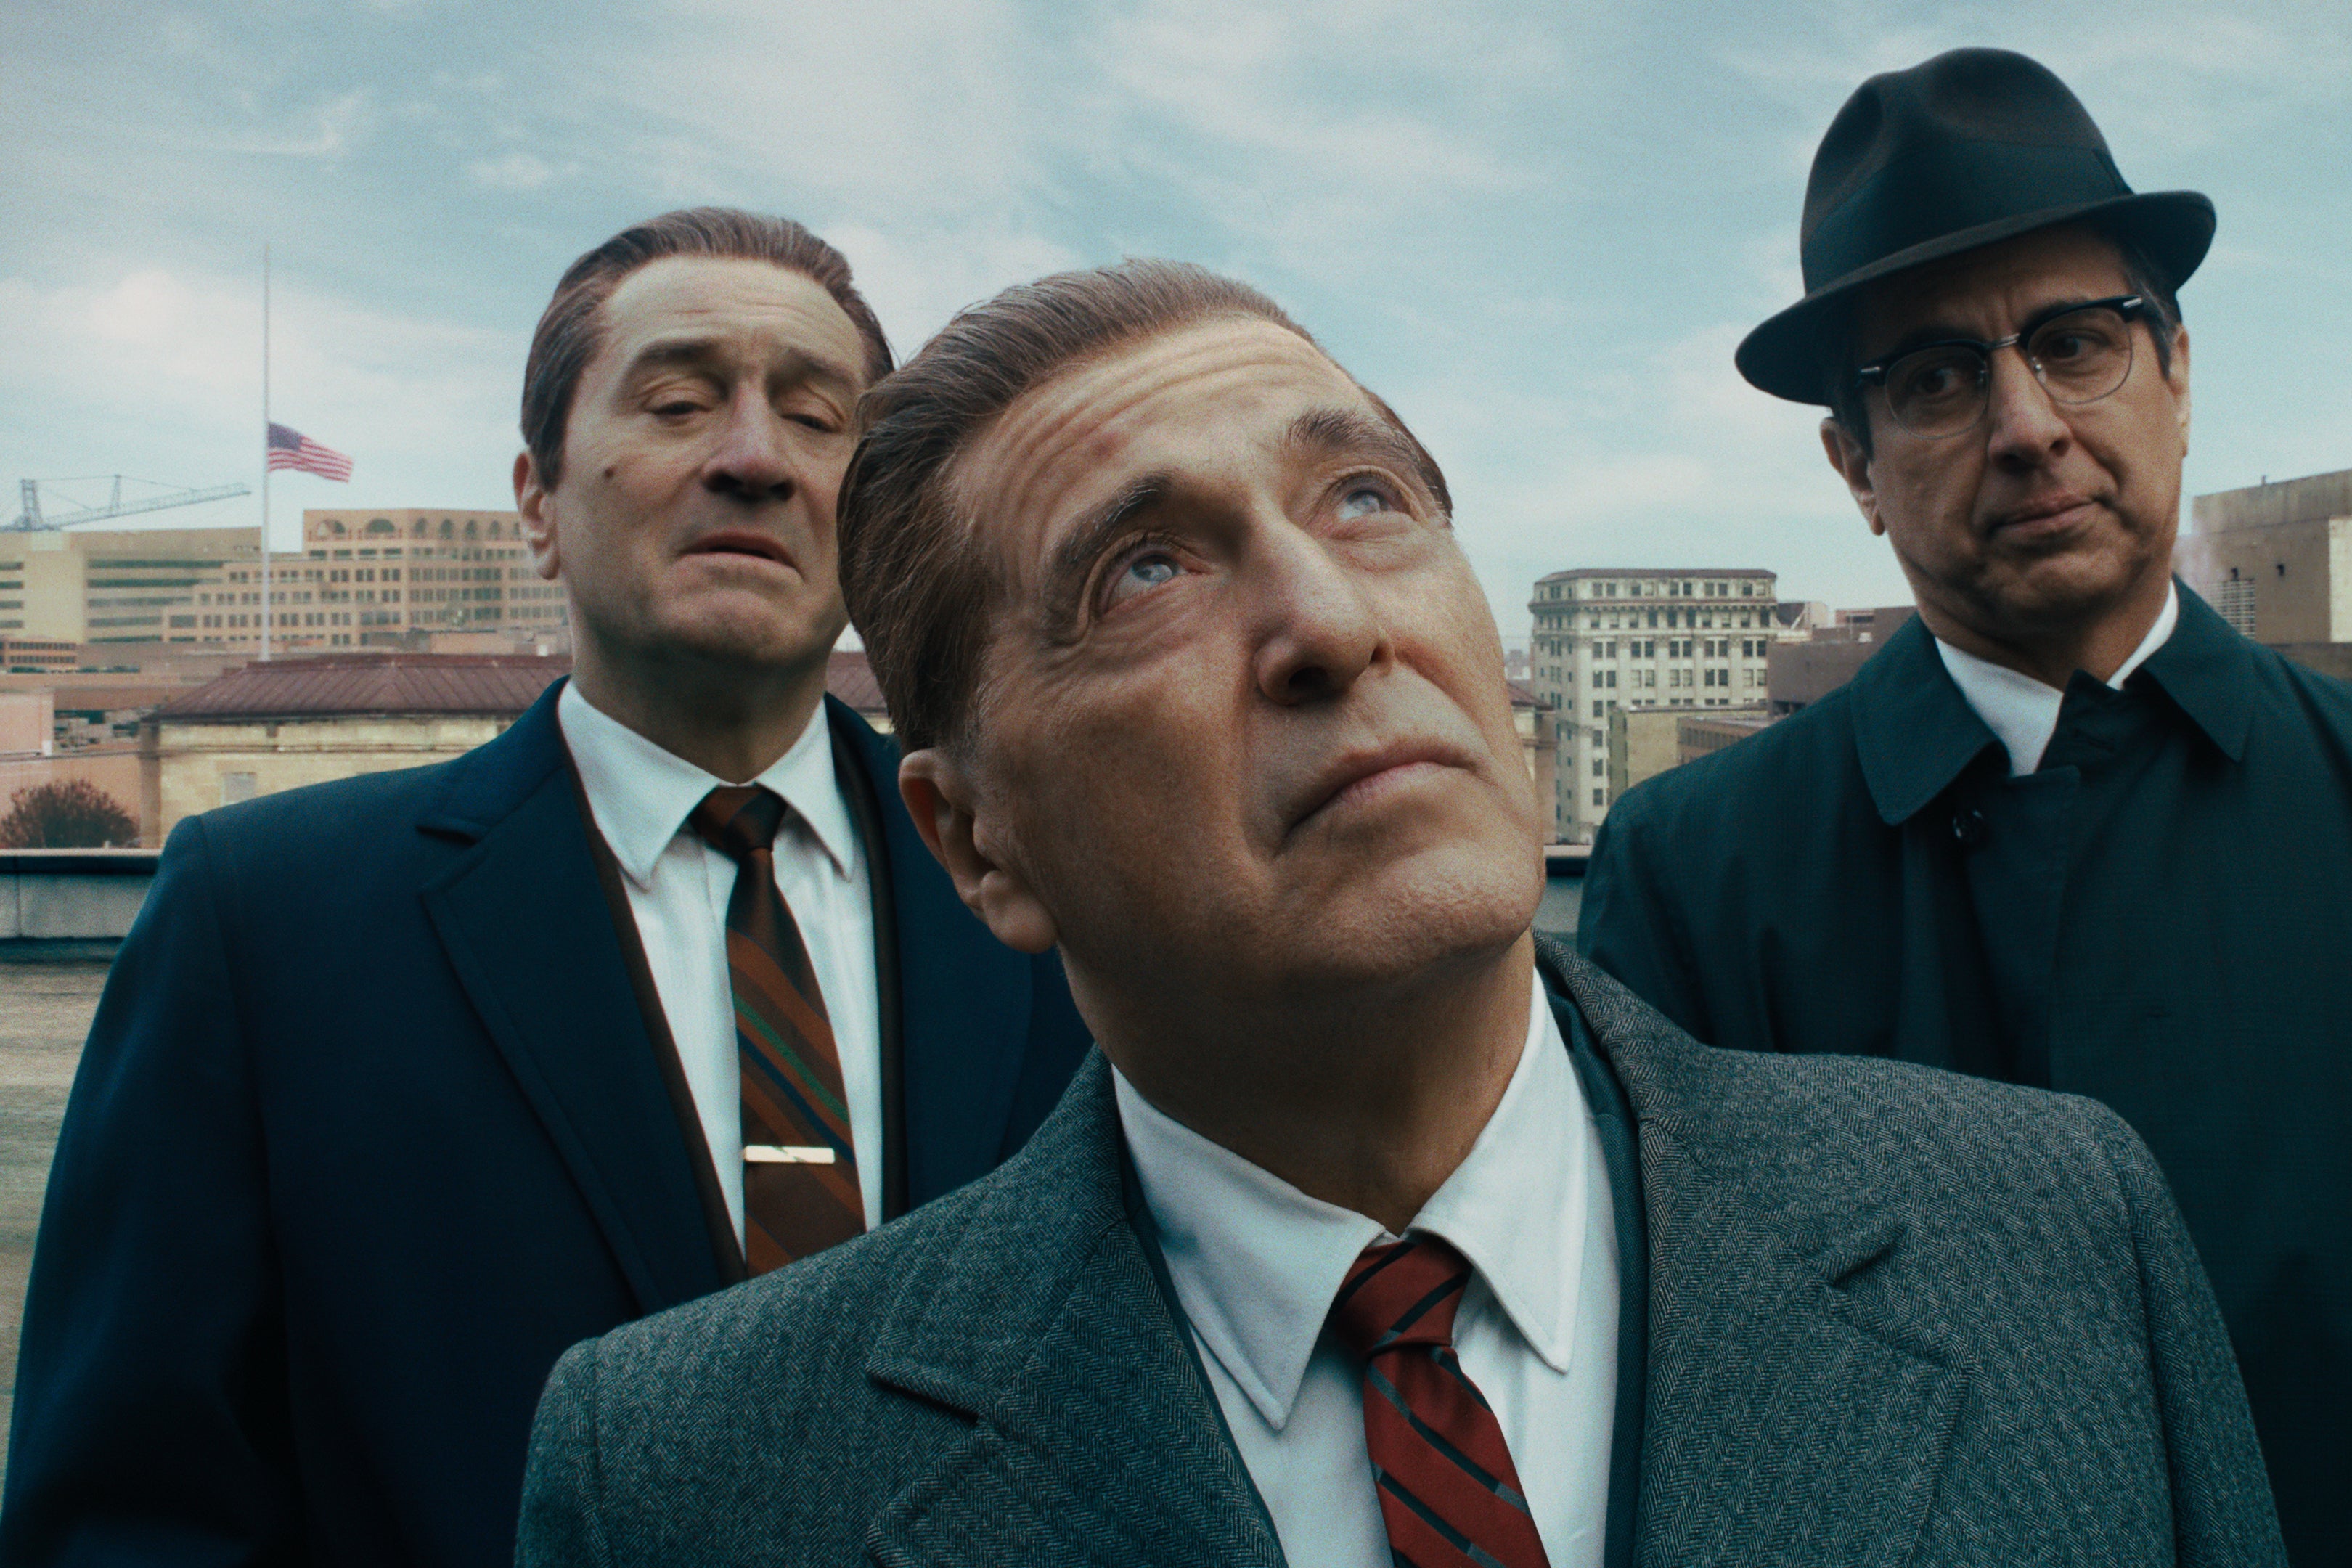 Robert De Niro and Ray Romano stand behind Al Pacino, who looks upward.